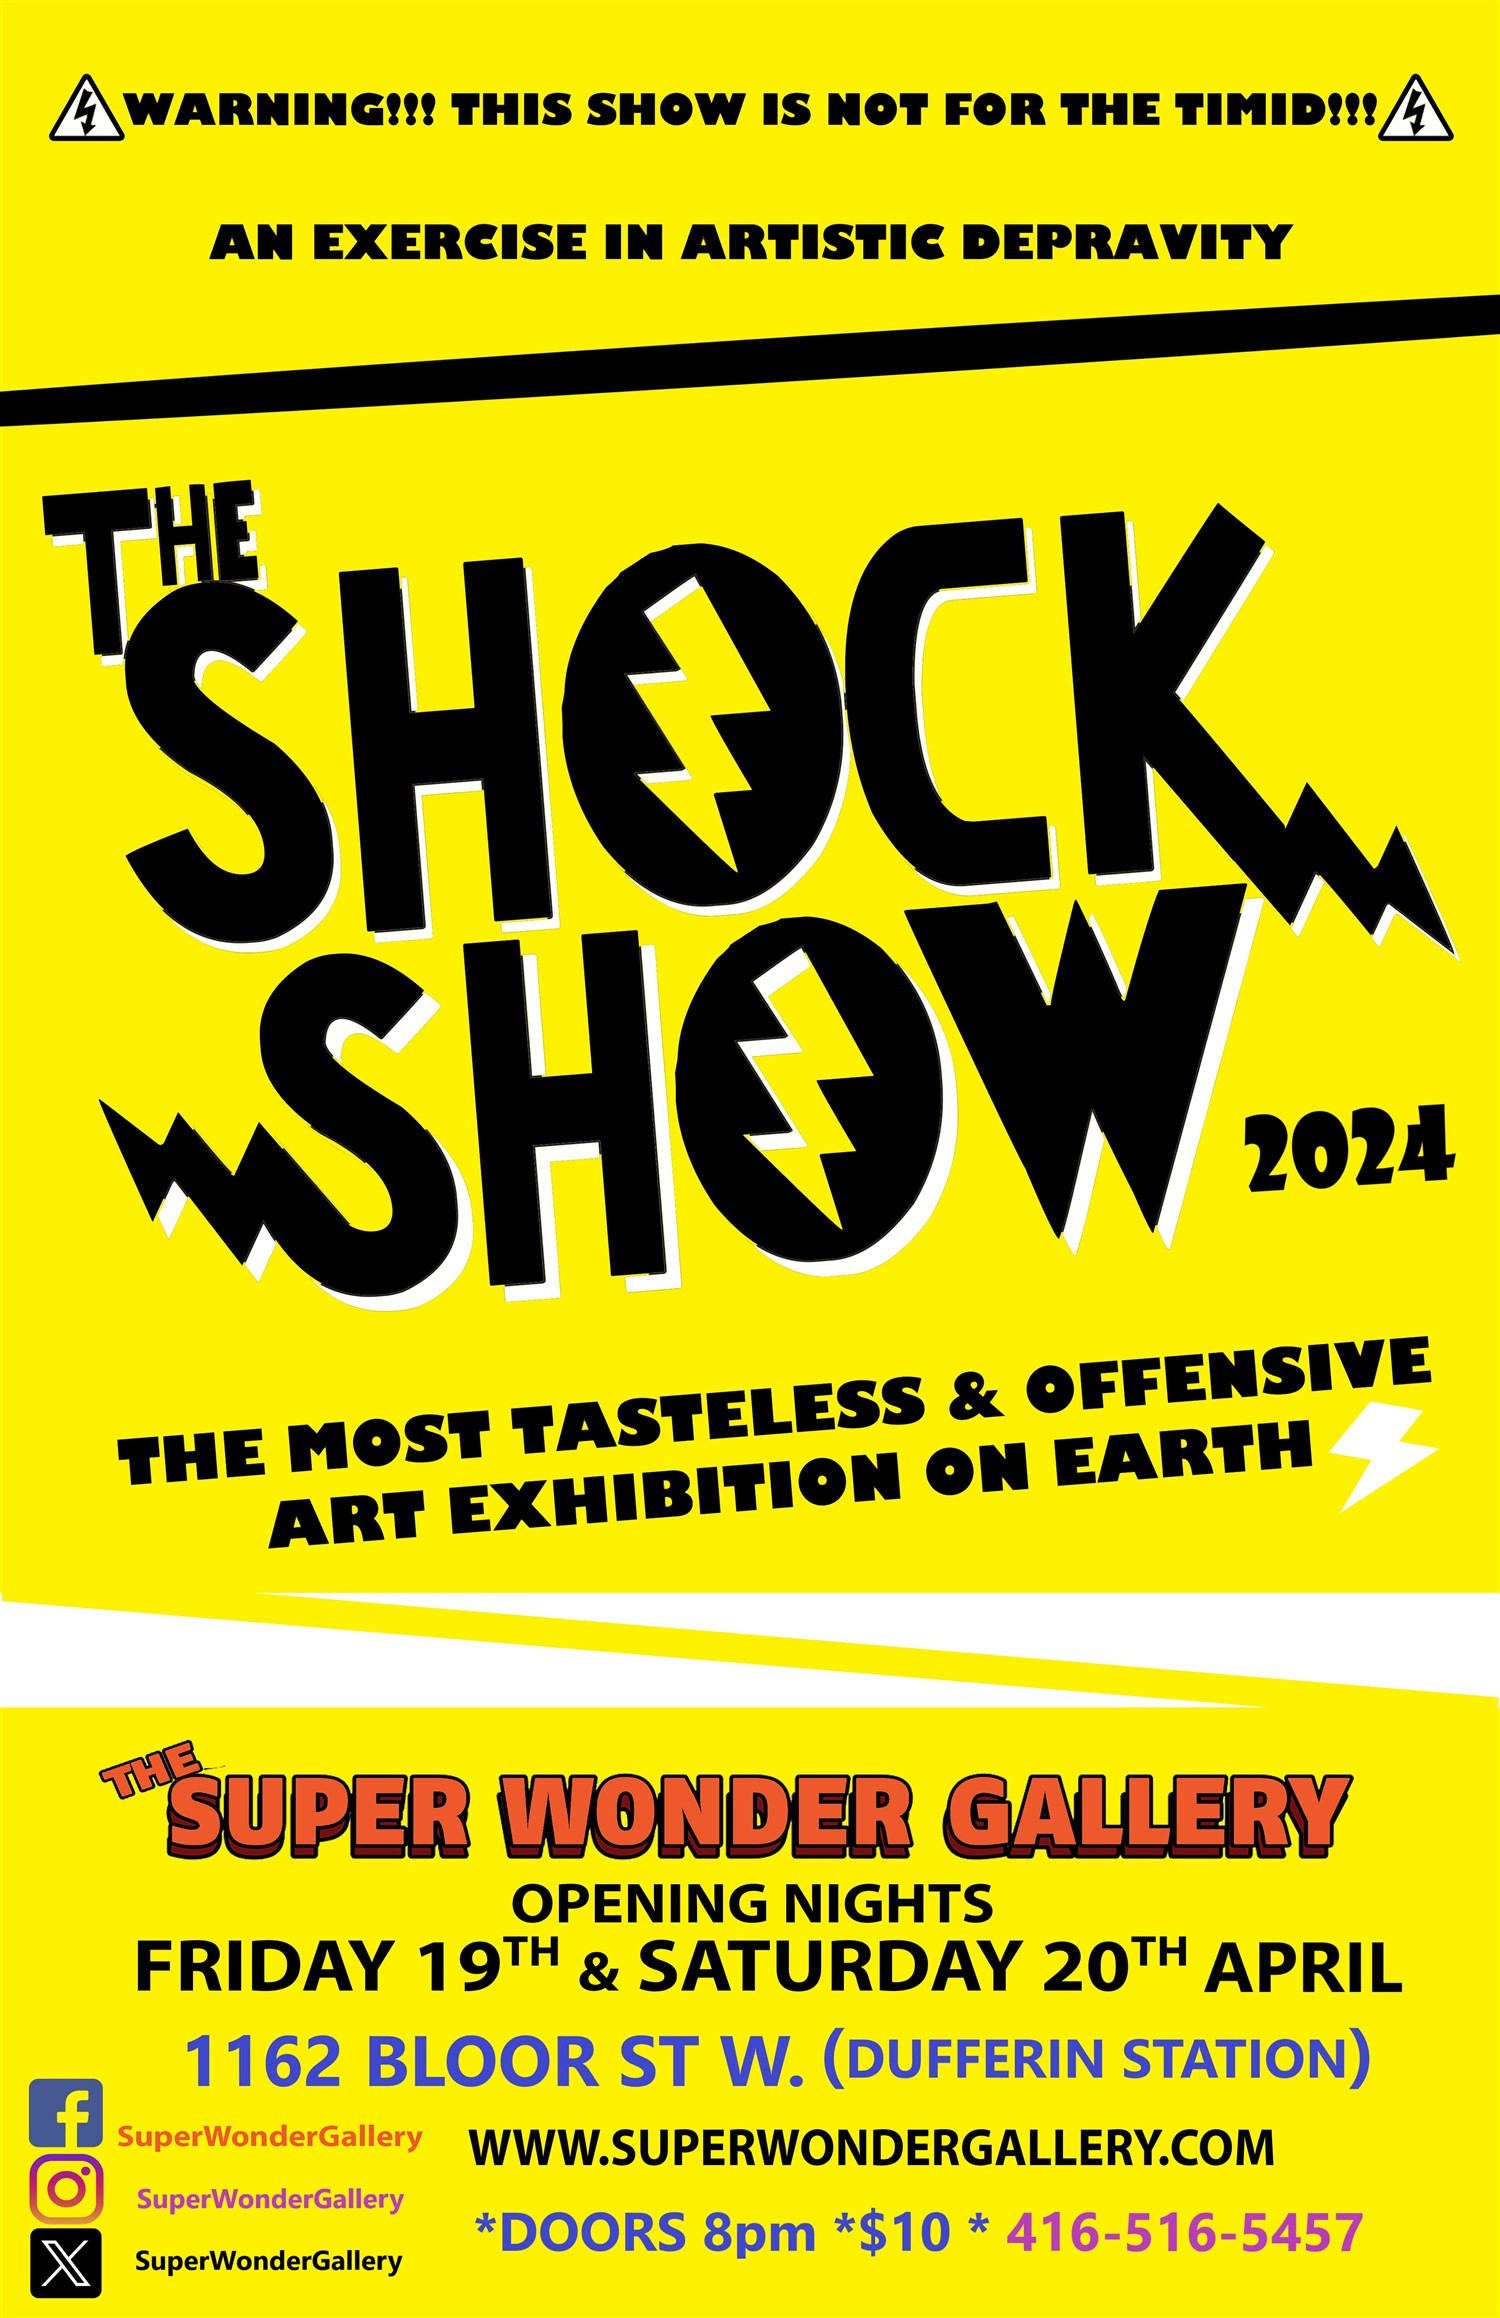 The SHOCK SHOW : Friday The most tasteless and offensive art exhibition on earth! on abr. 19, 20:00@SUPER WONDER GALLERY - Compra entradas y obtén información enSuper Wonder Gallery 